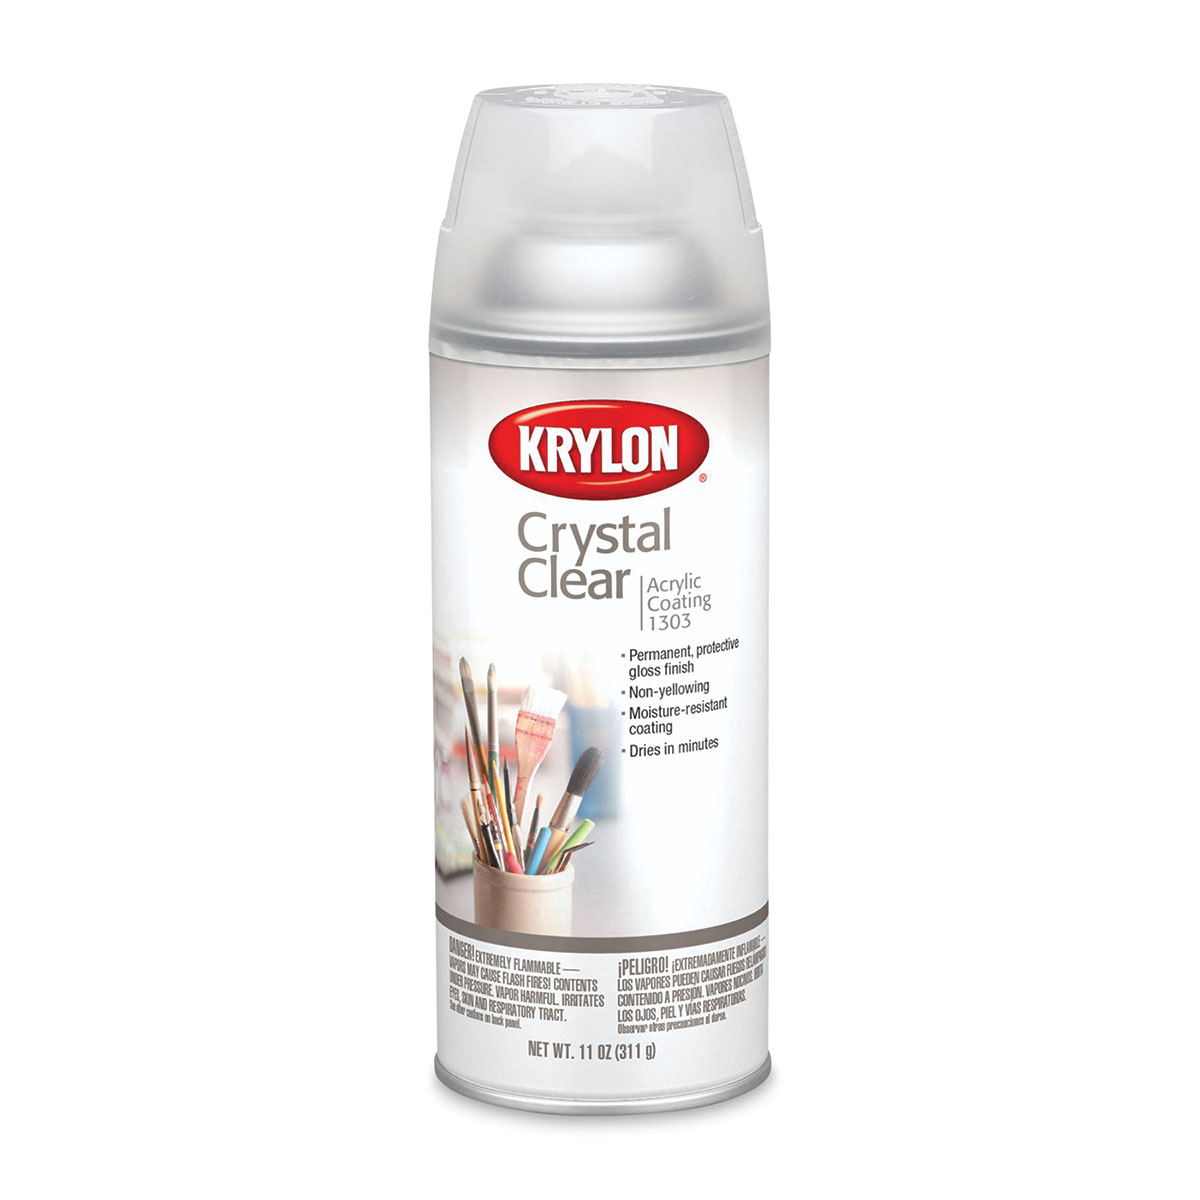 Krylon Crystal Clear Acrylic Coating